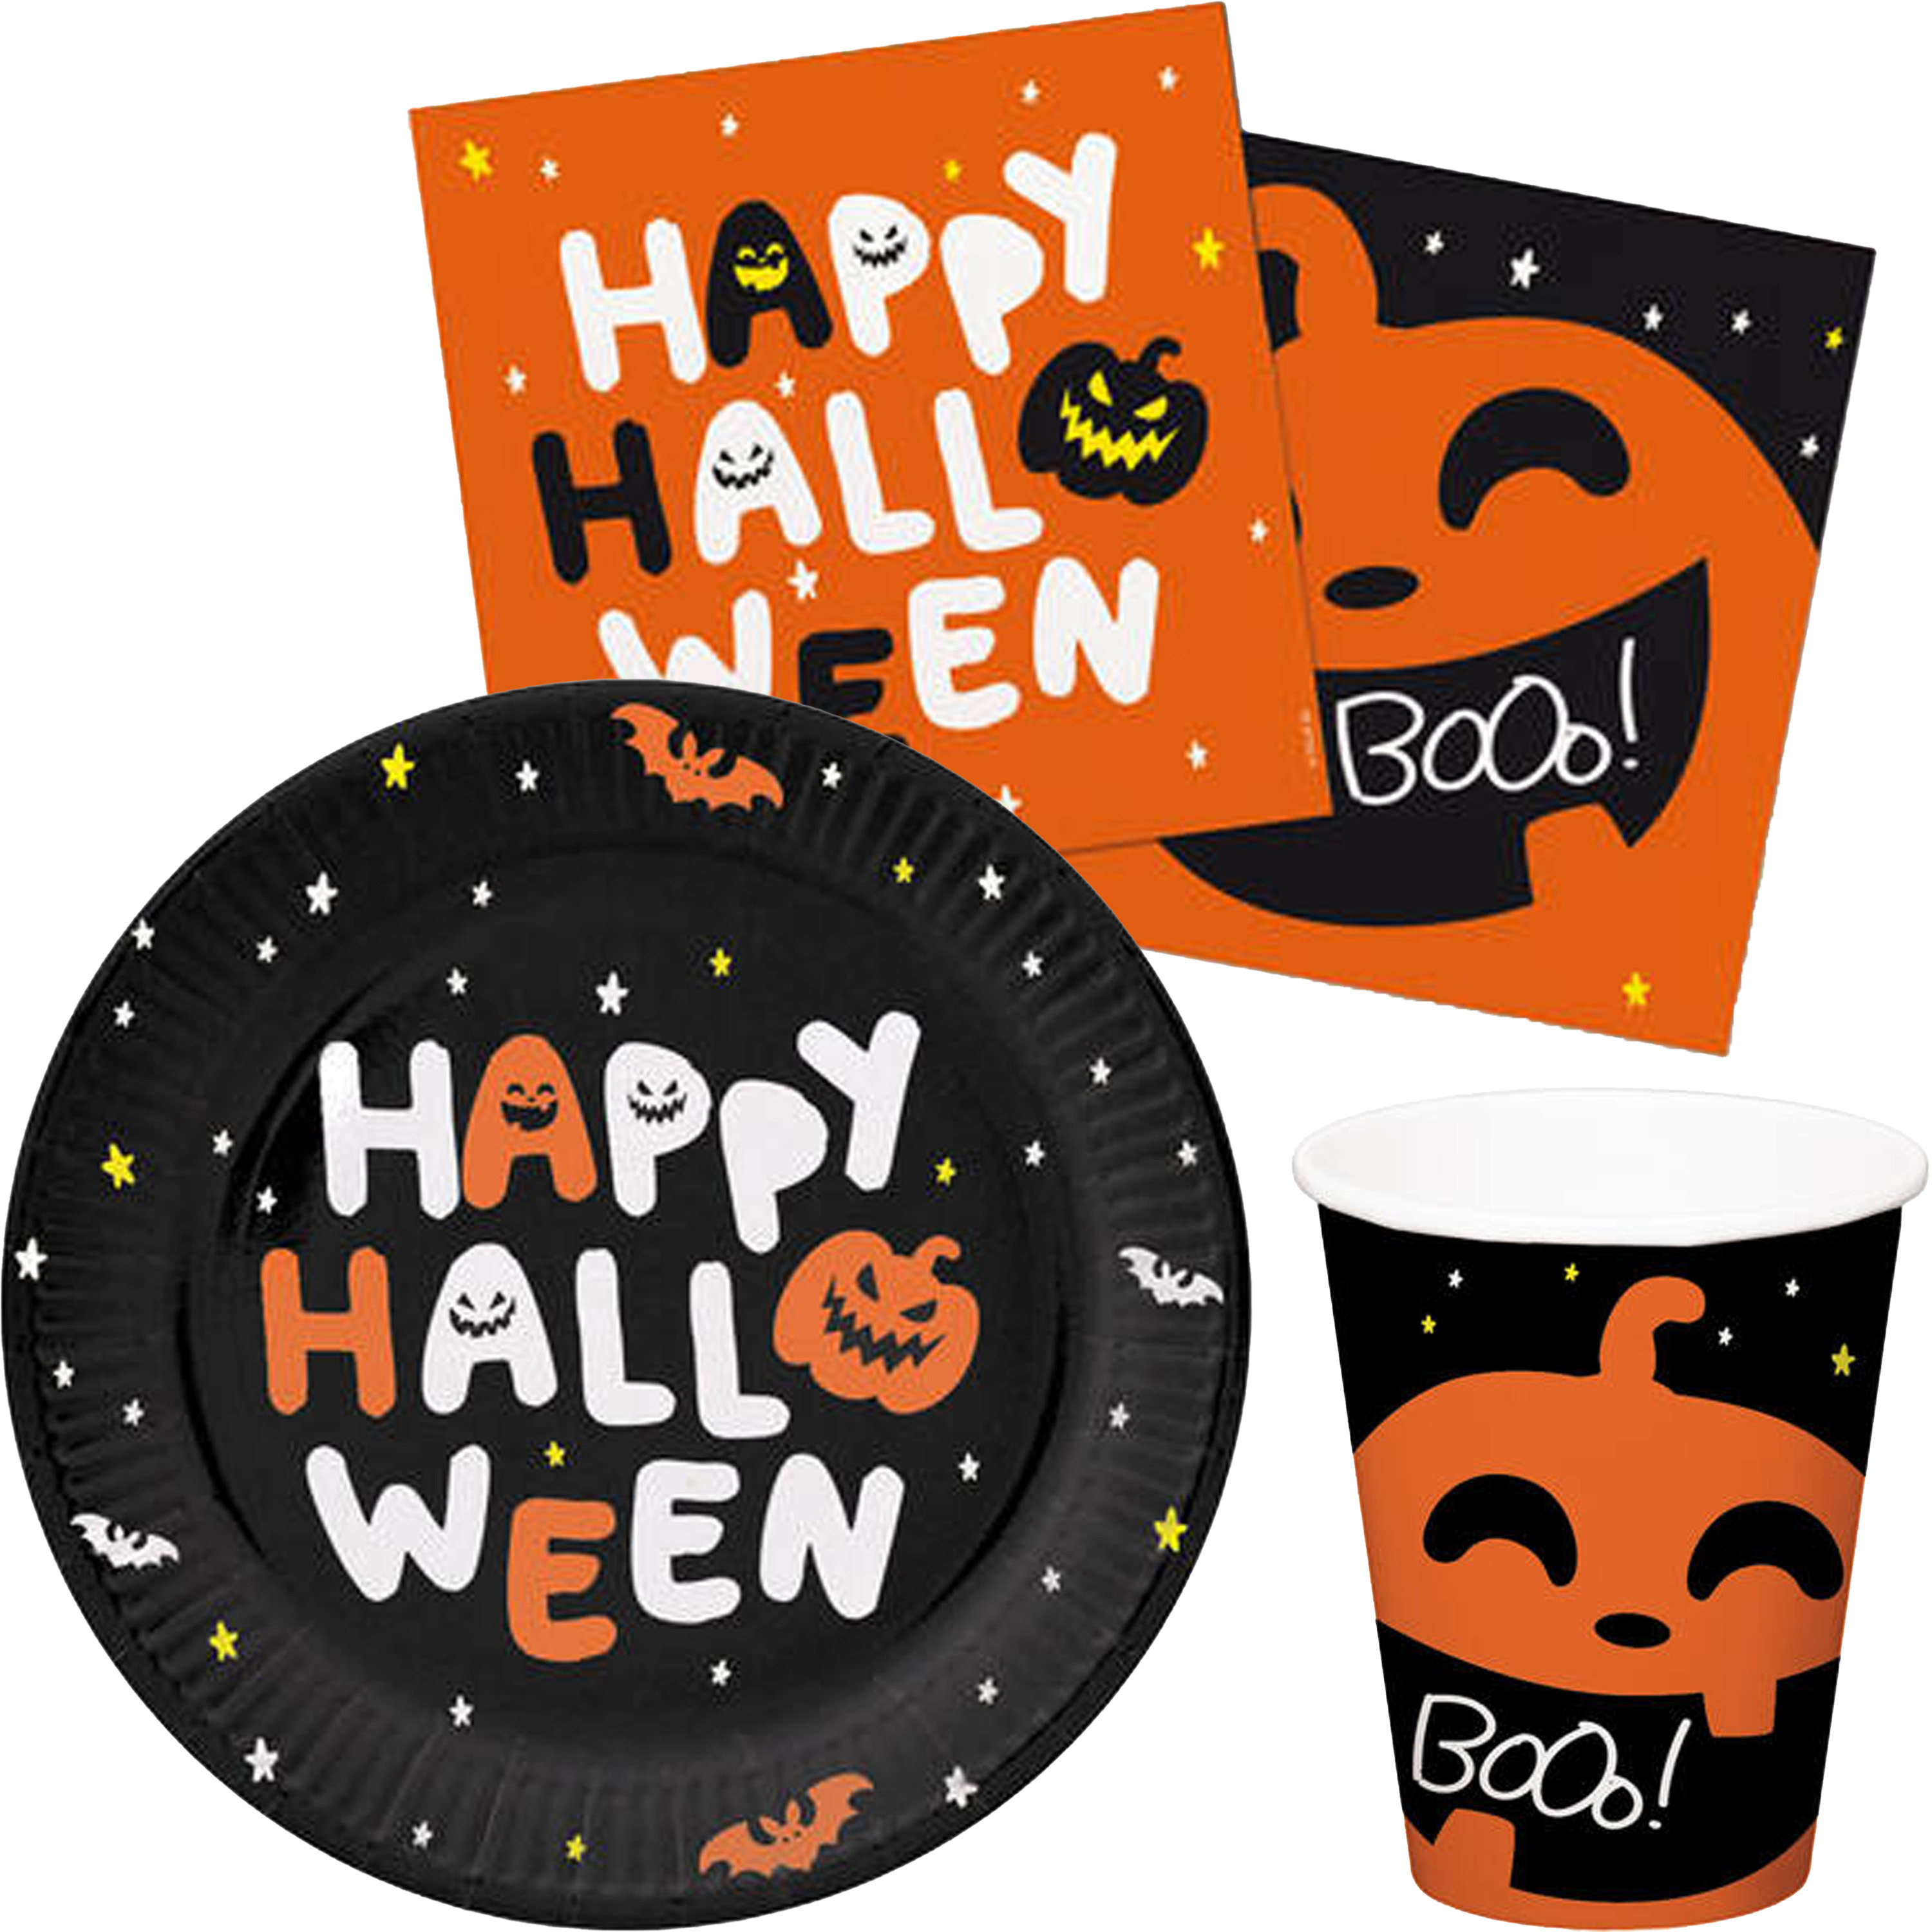 Halloween thema feest set bord/beker/servetten - 44x - pompoen BoOo print - papier -